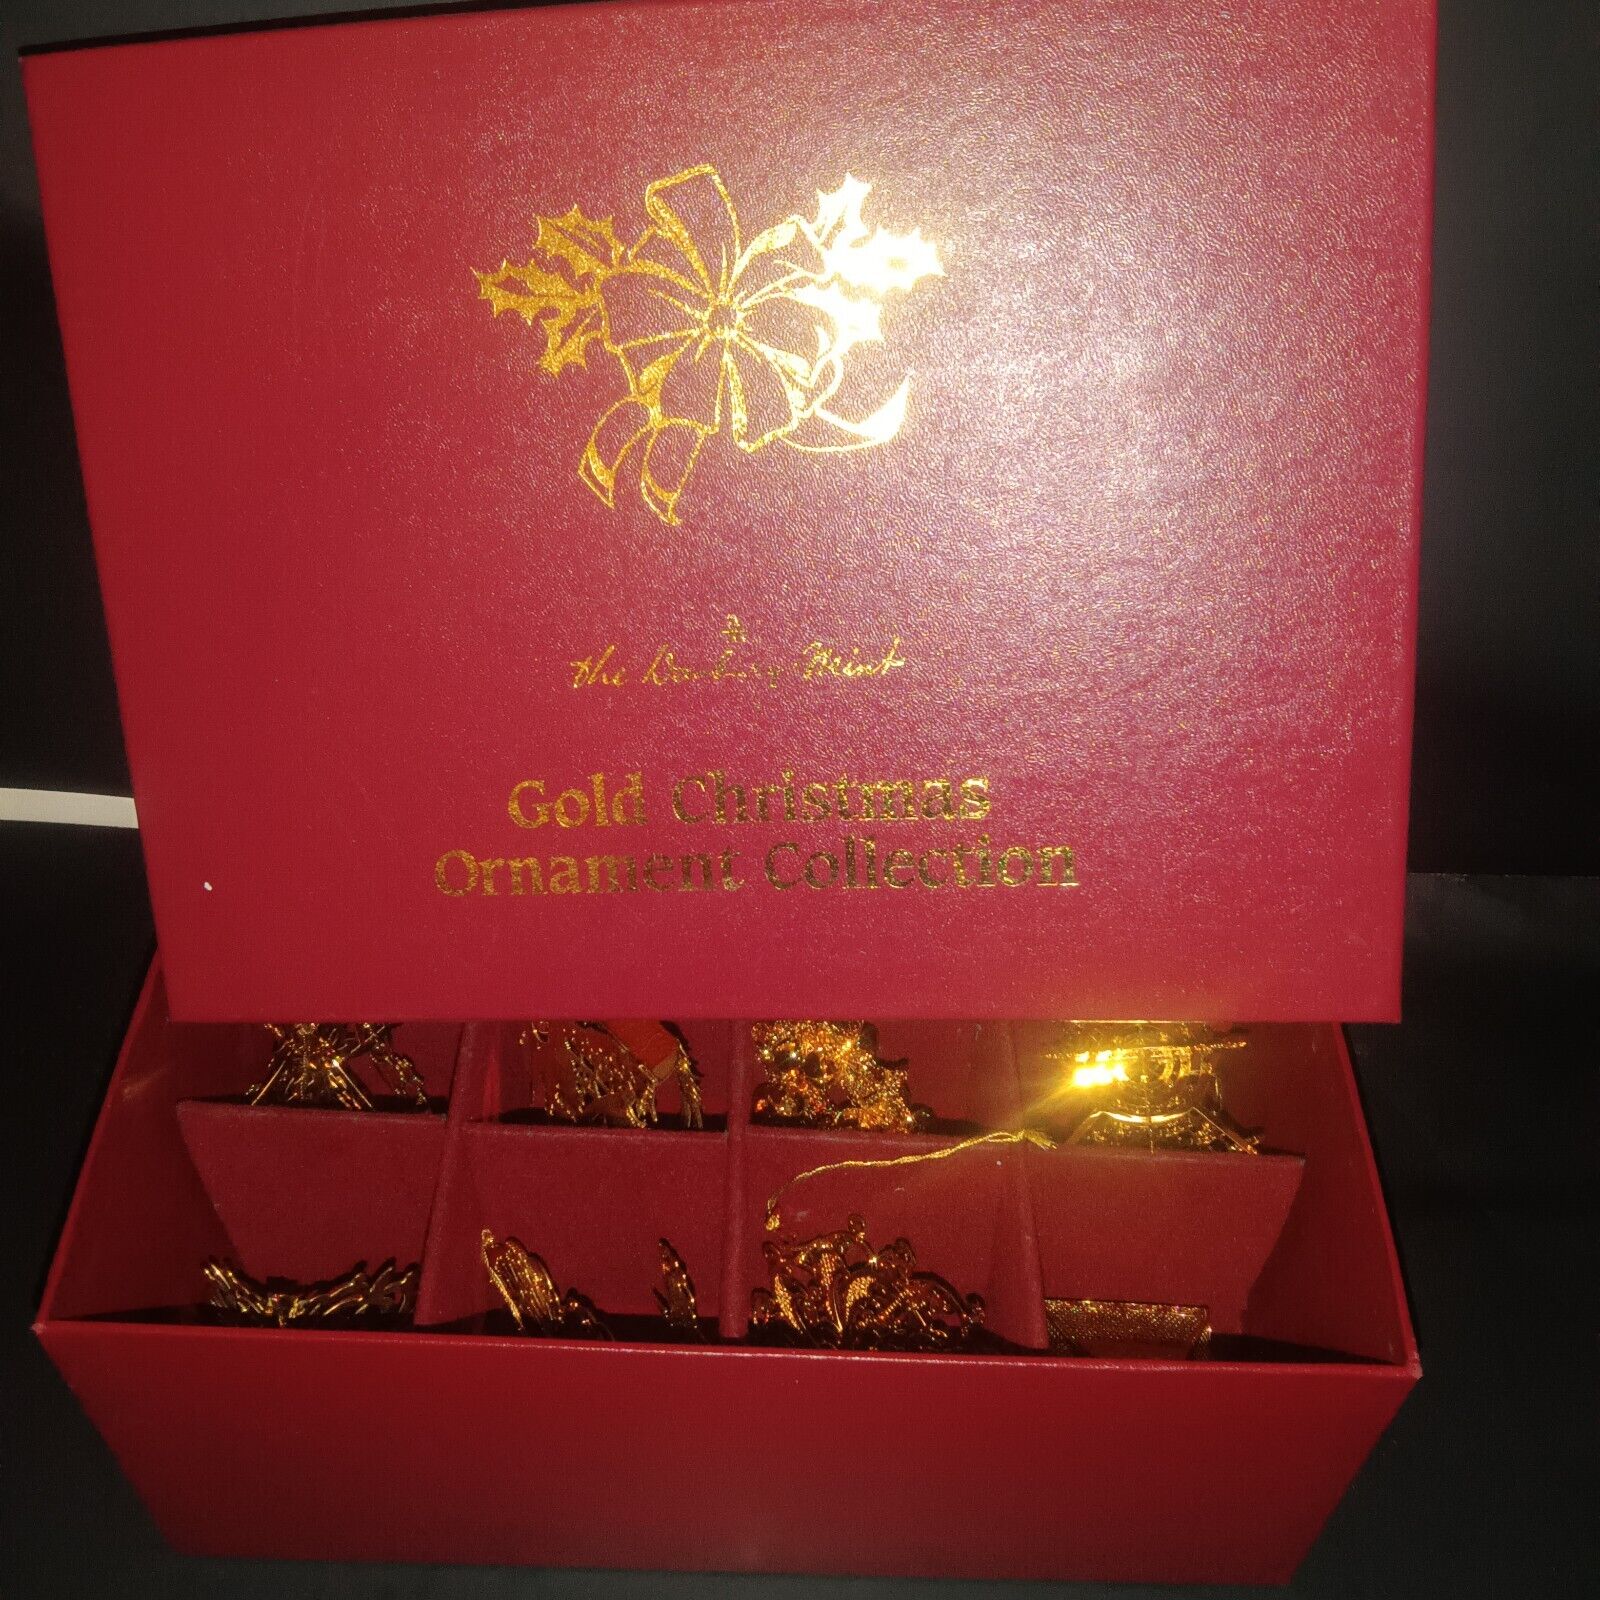 Danbury Mint Gold Christmas  12 Ornaments Incl Orig Box (mixed Years  1981-2006)